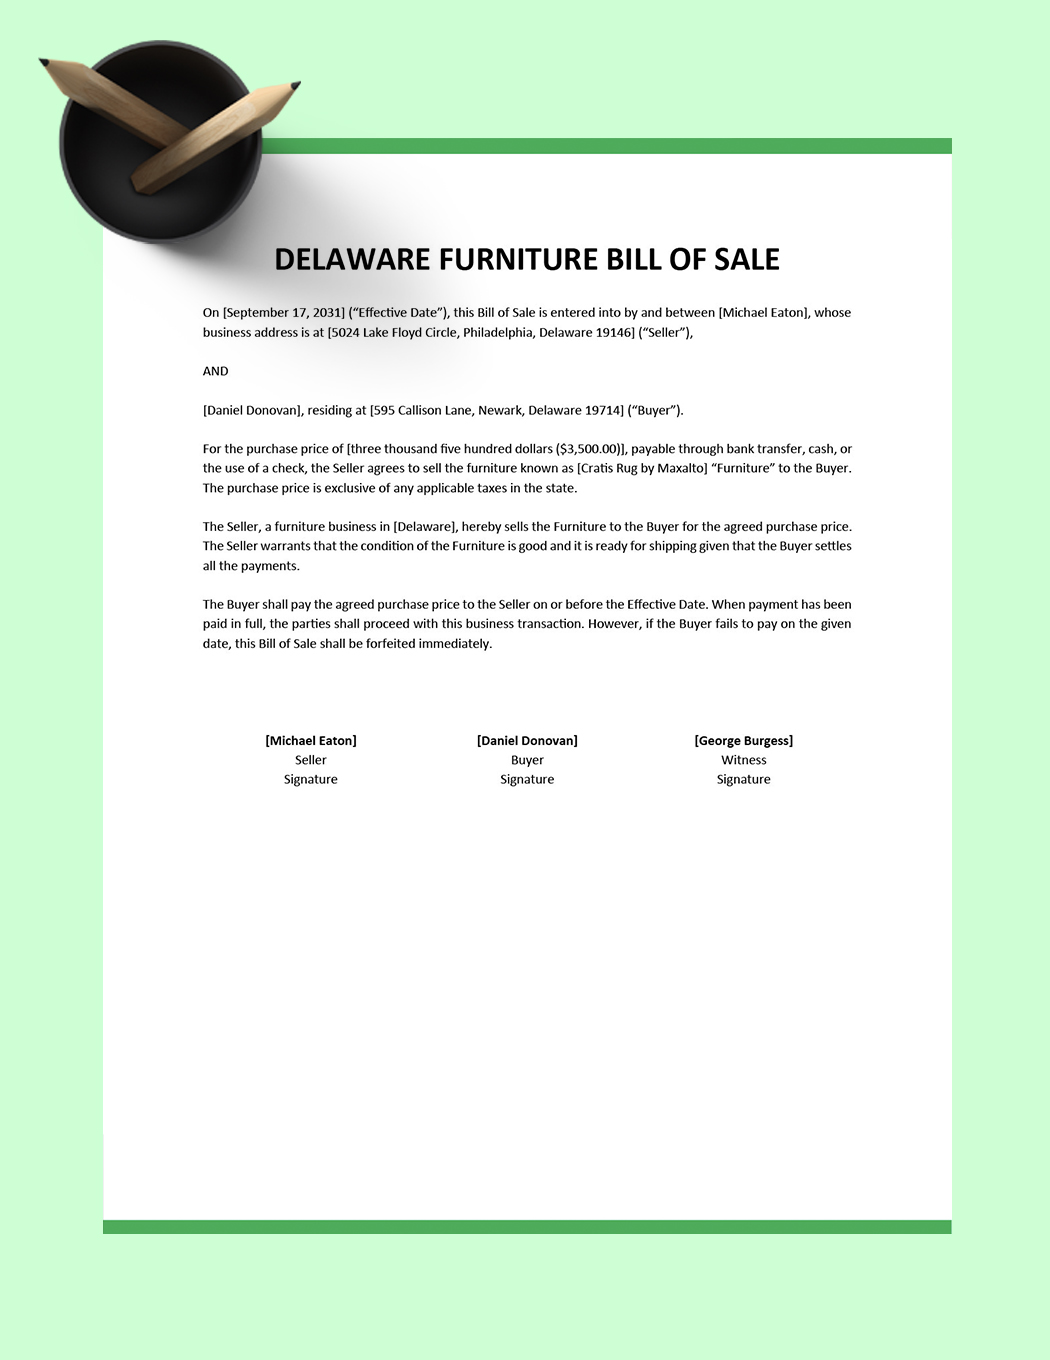 Delaware Furniture Bill Of Sale Template